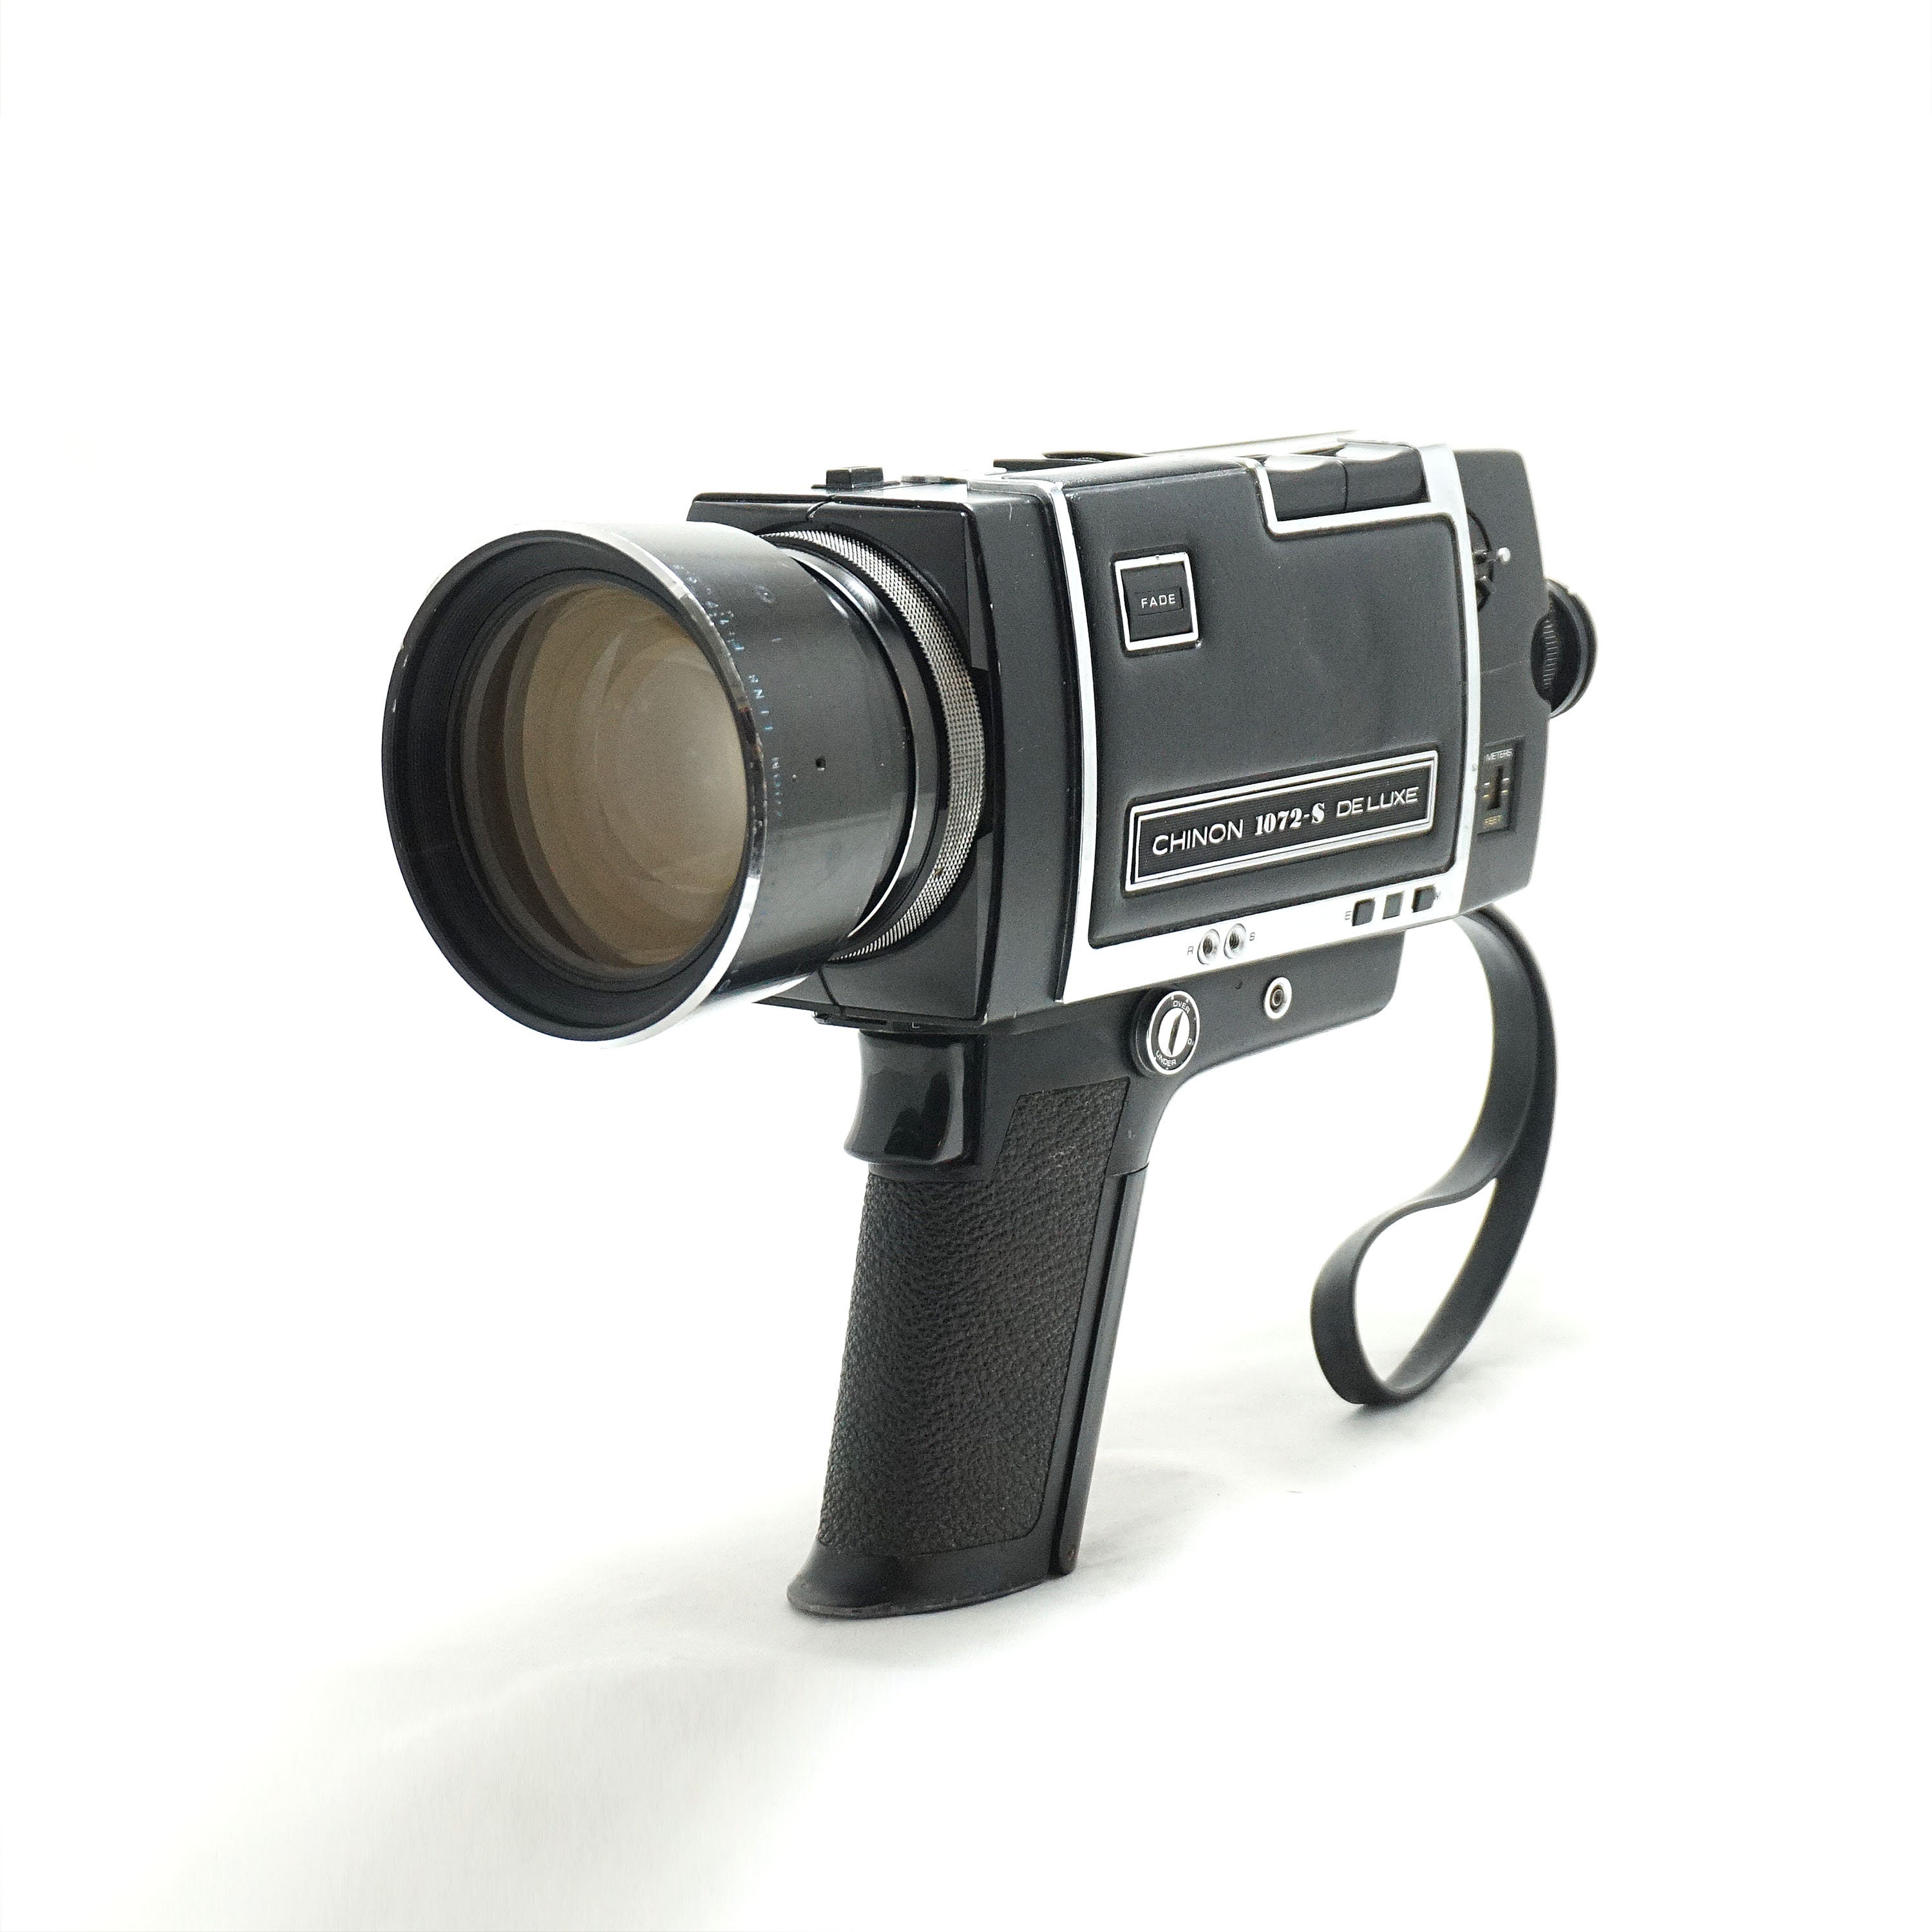 Super 8 Camera Test and Working Chinon 8mm Film Camera Chinon 1072